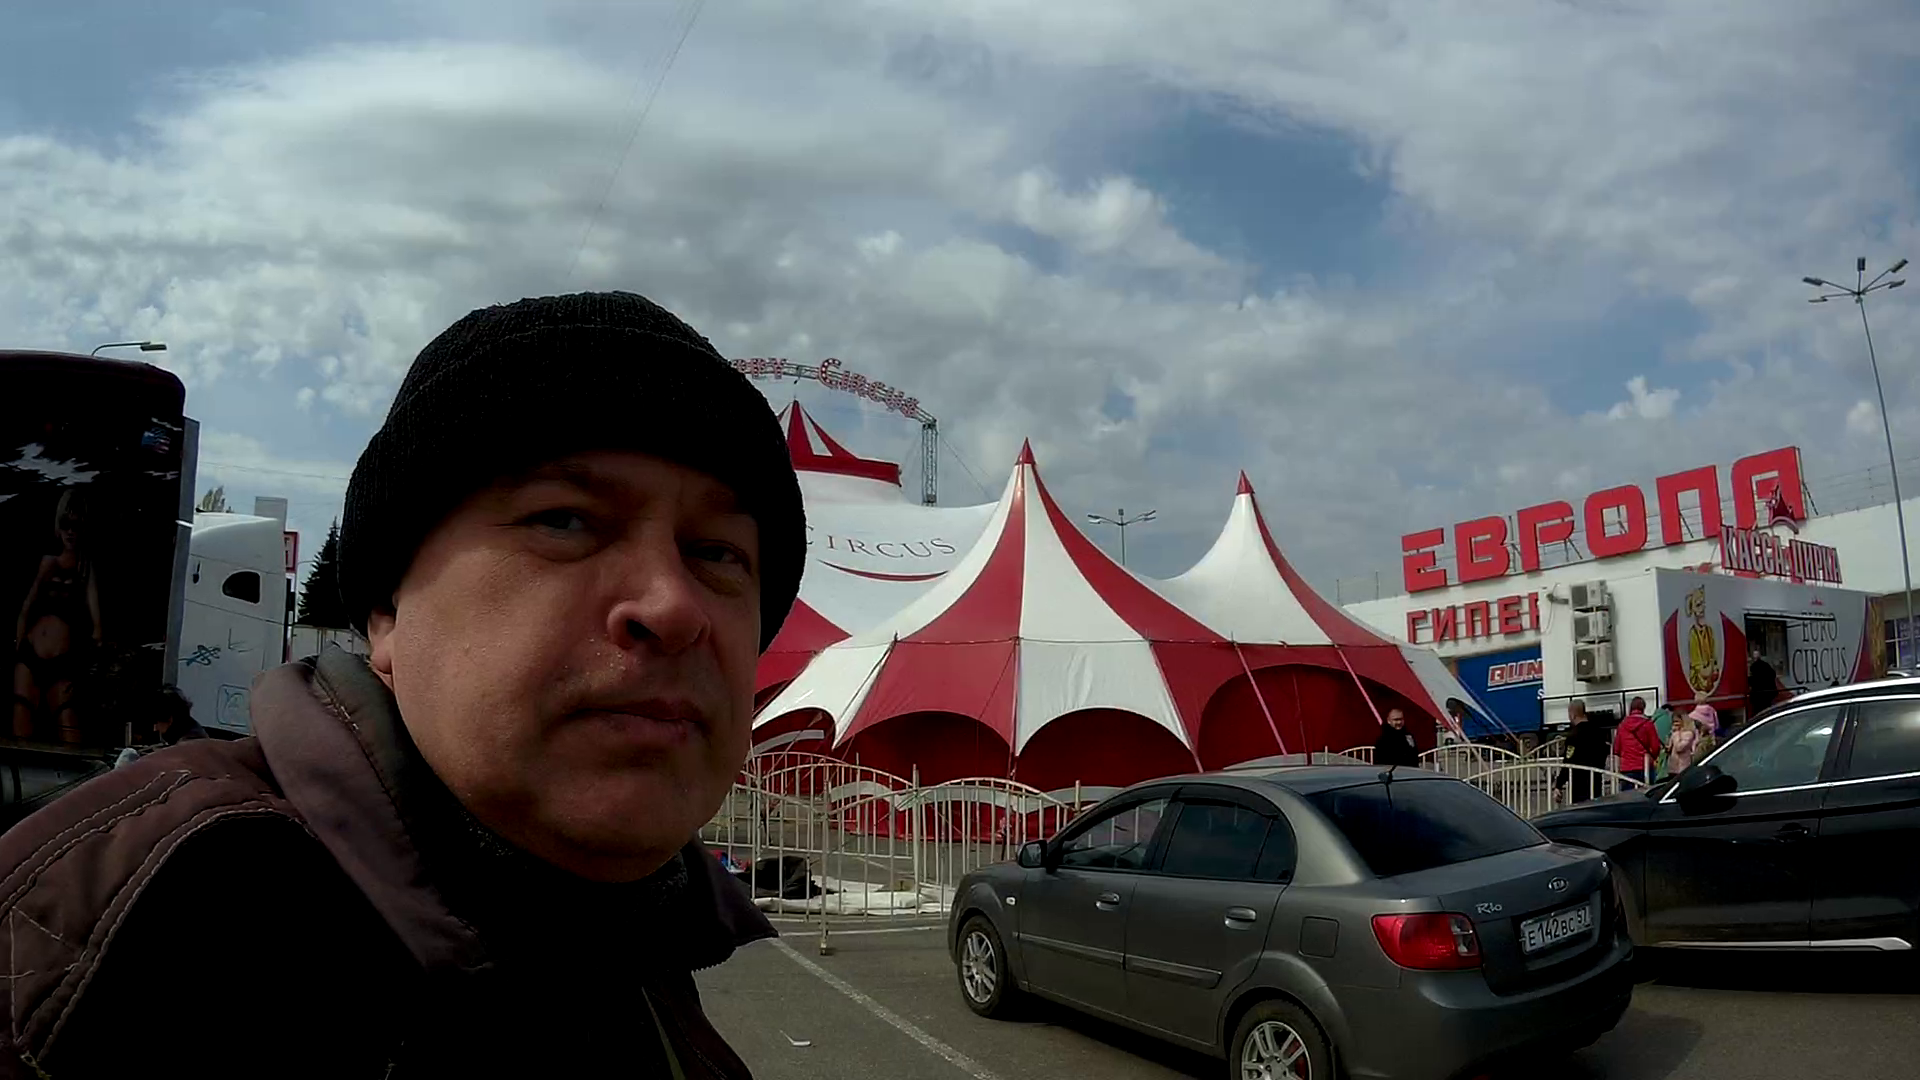 Сегодня я снял видео про цирк возле гипермаркета Европа